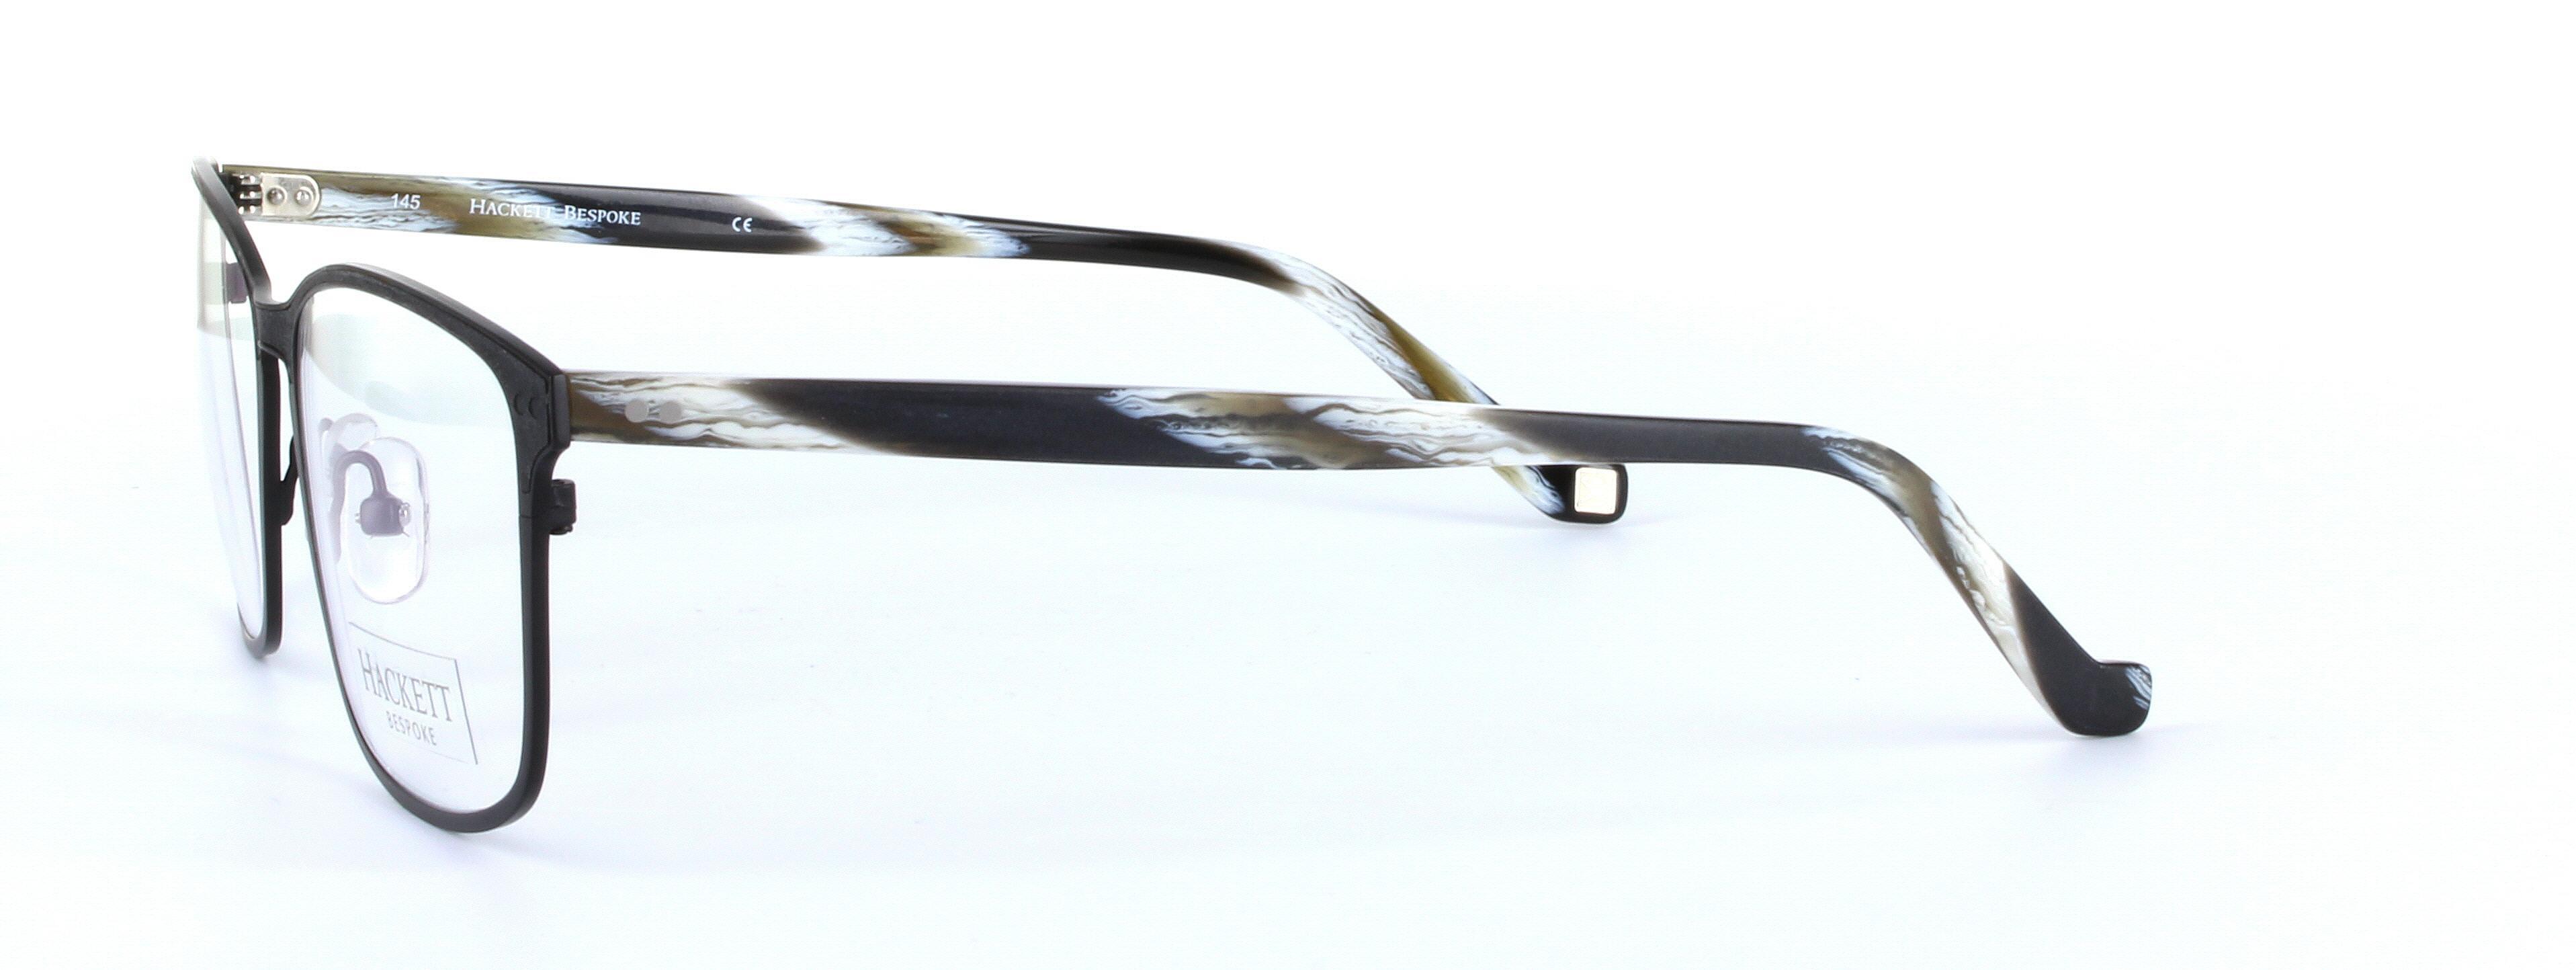 HACKETT BESPOKE (177-02) Black Full Rim Oval Square Metal Glasses - Image View 2